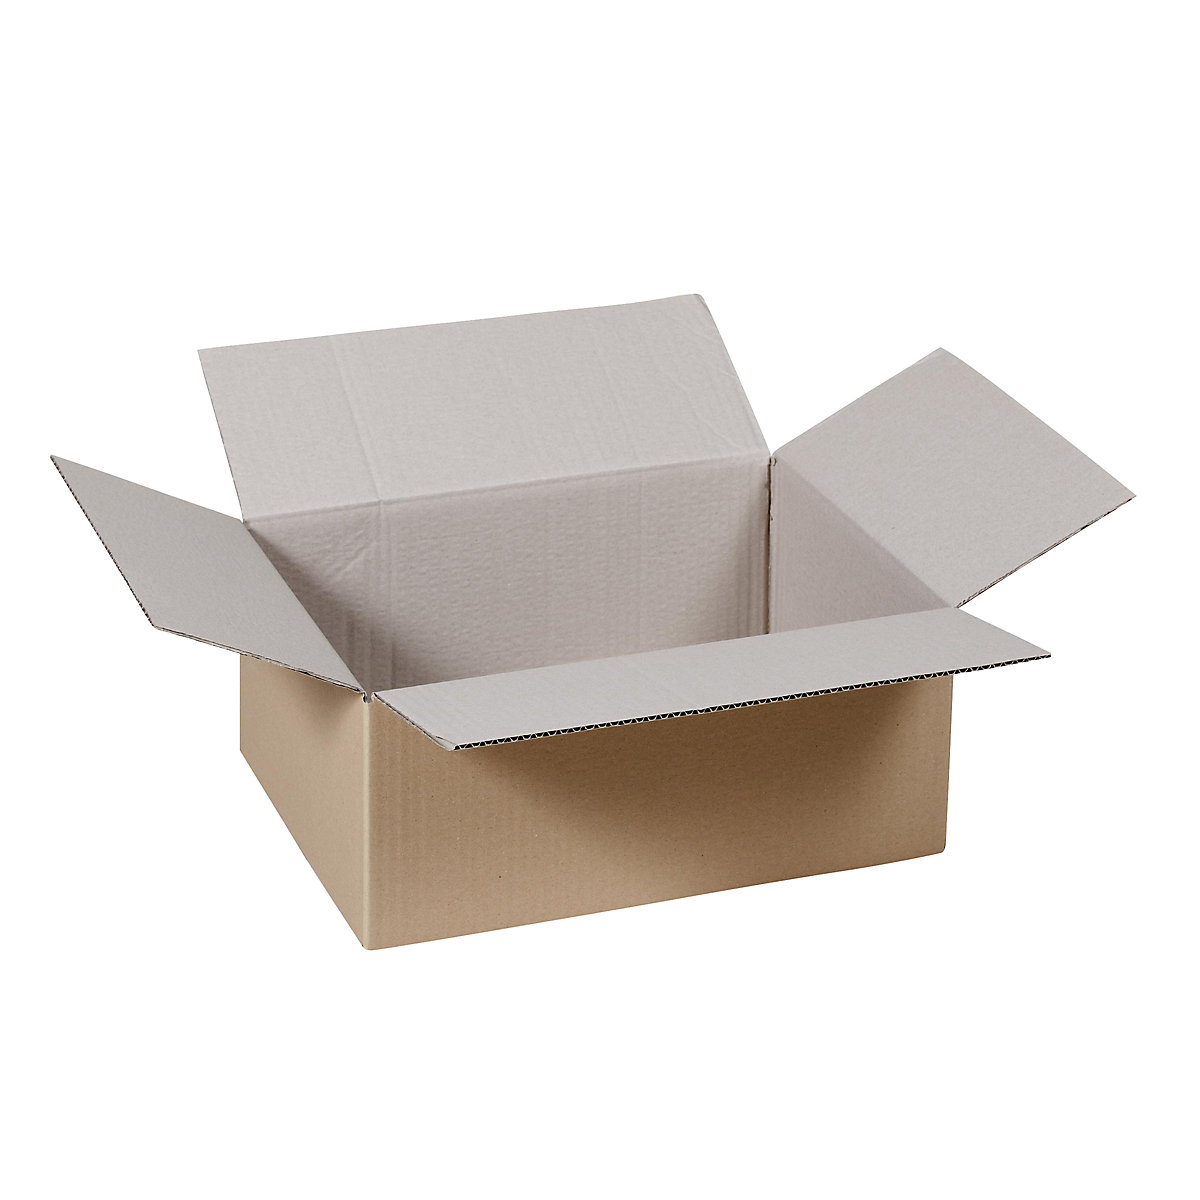 Folding cardboard box, FEFCO 0201, made of single fluted cardboard, internal dimensions 300 x 200 x 170 mm, pack of 100-20